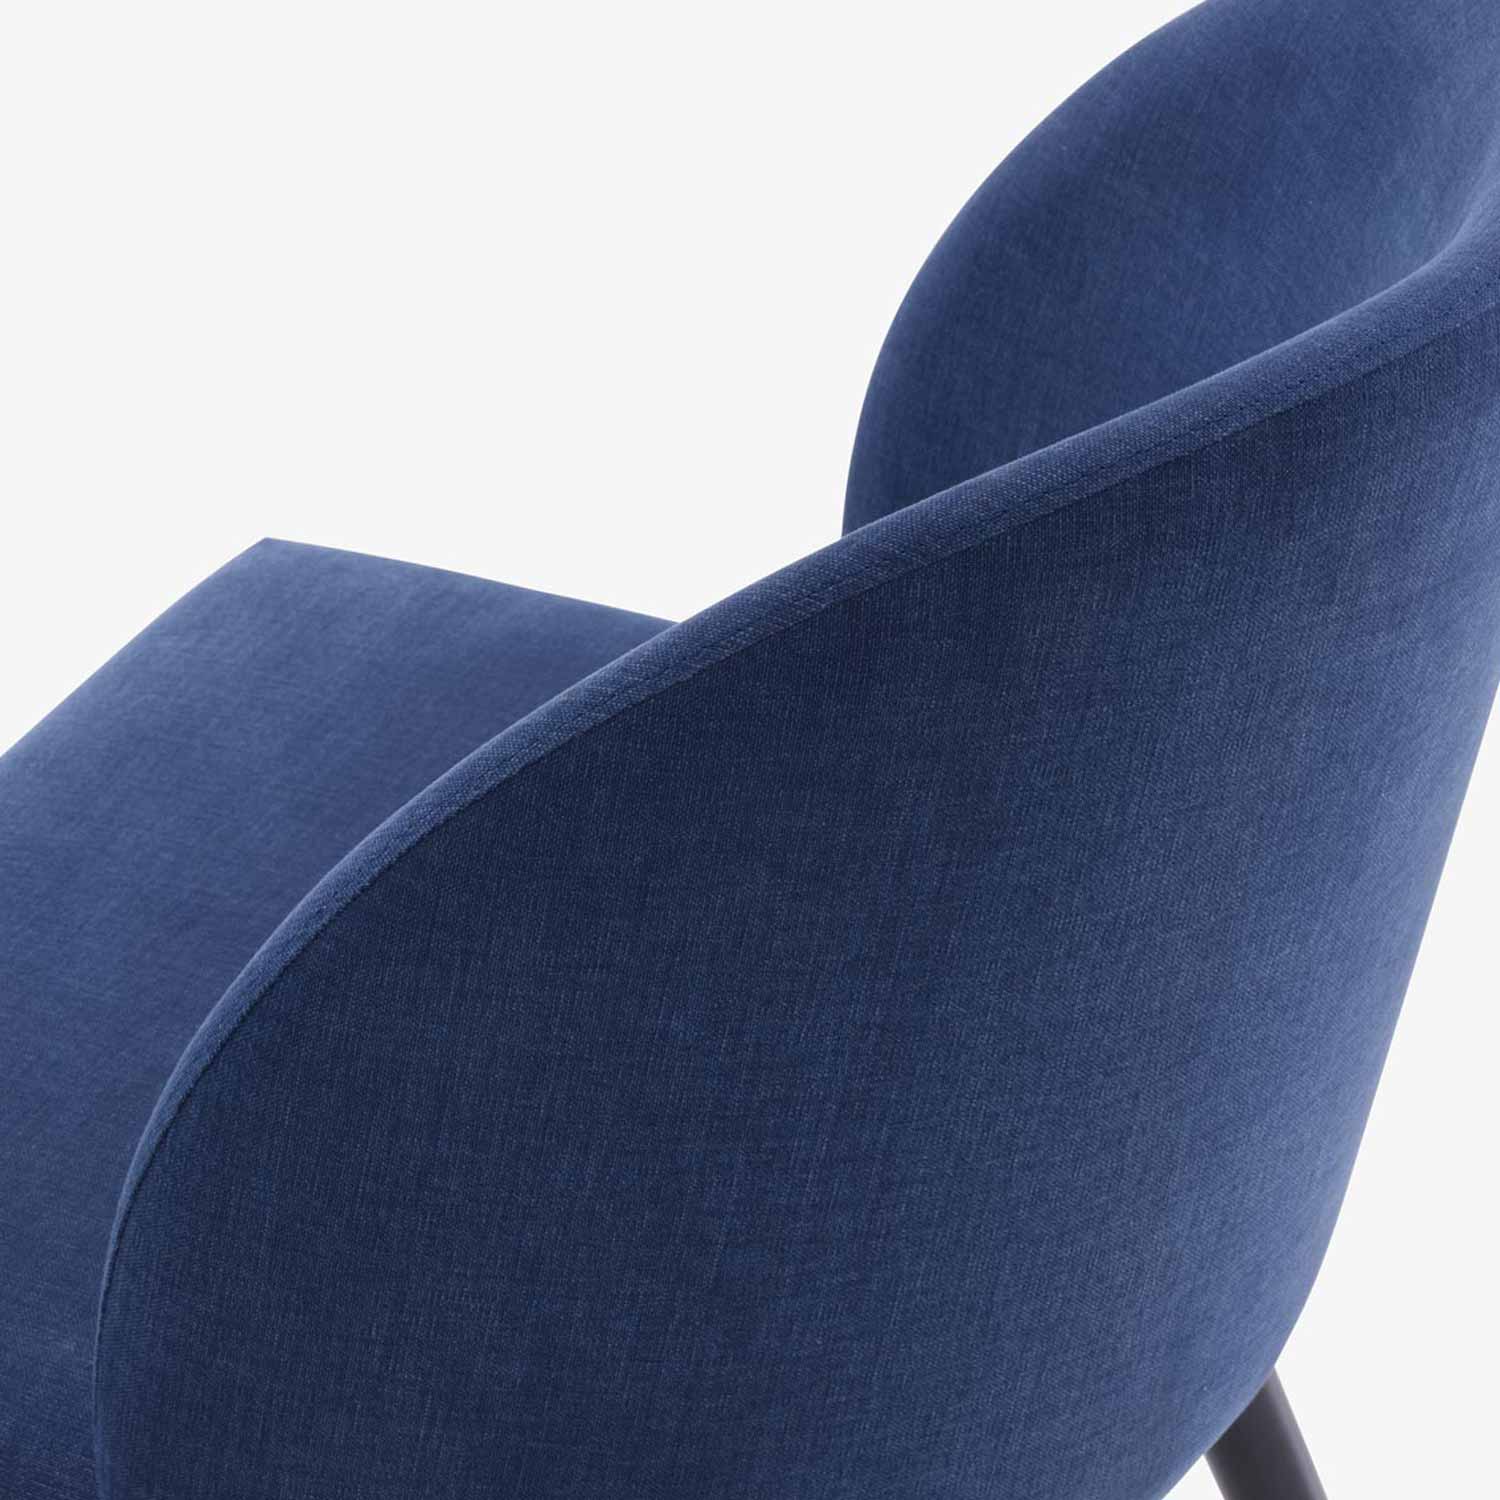 Image Chair fabric-bleu nuit (midnight blue)  6